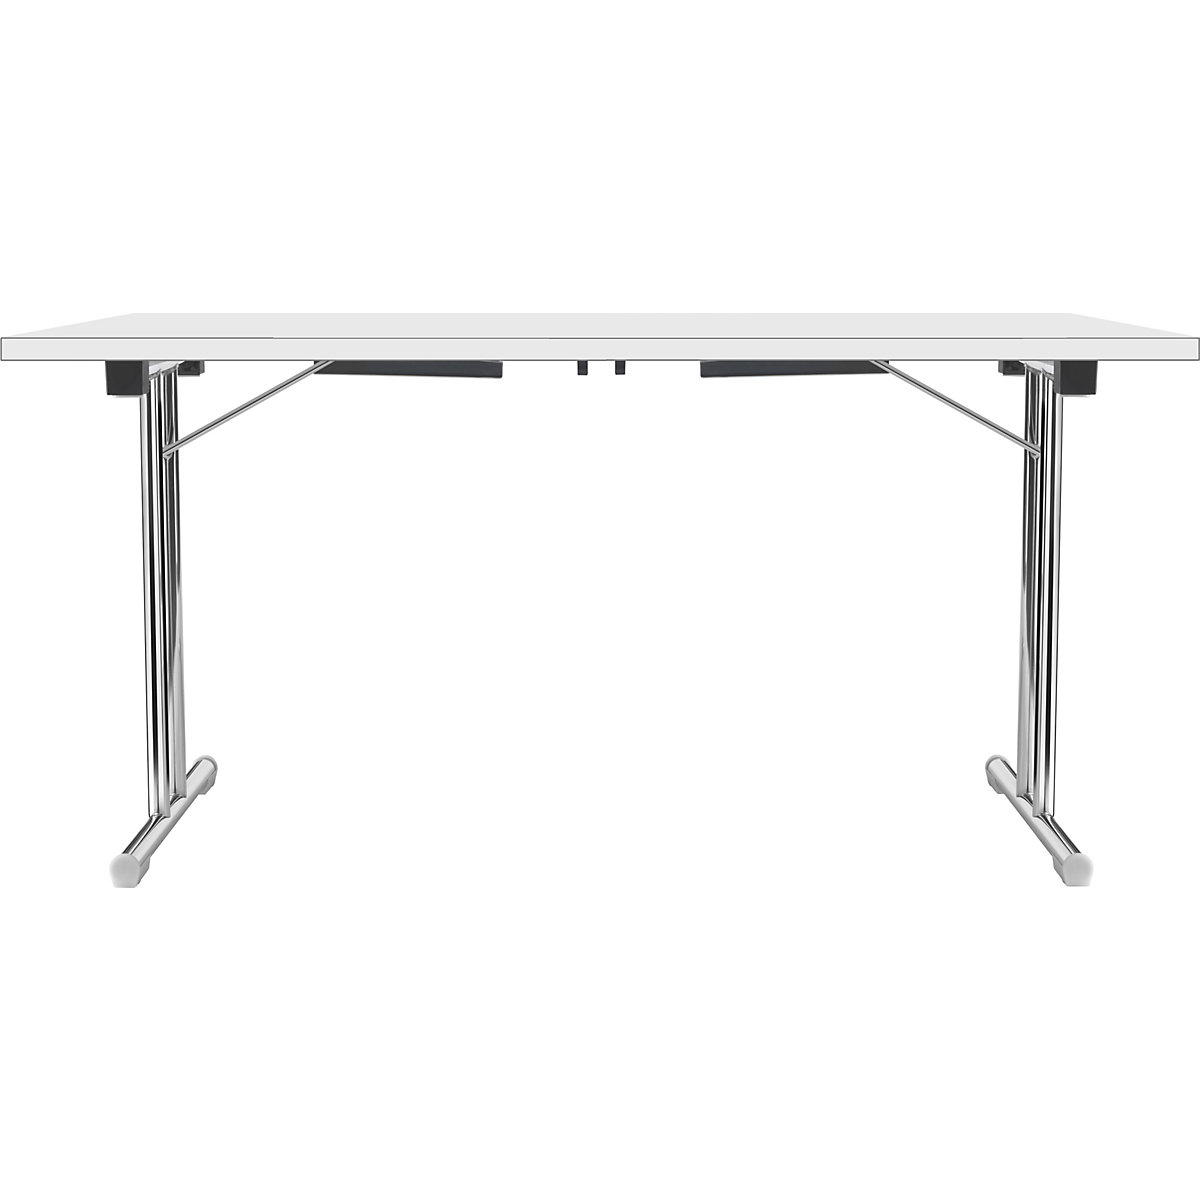 Inklapbare tafel met dubbel T-vormig onderstel, frame van staalbuis, verchroomd, wit/wit, b x d = 1200 x 600 mm-8